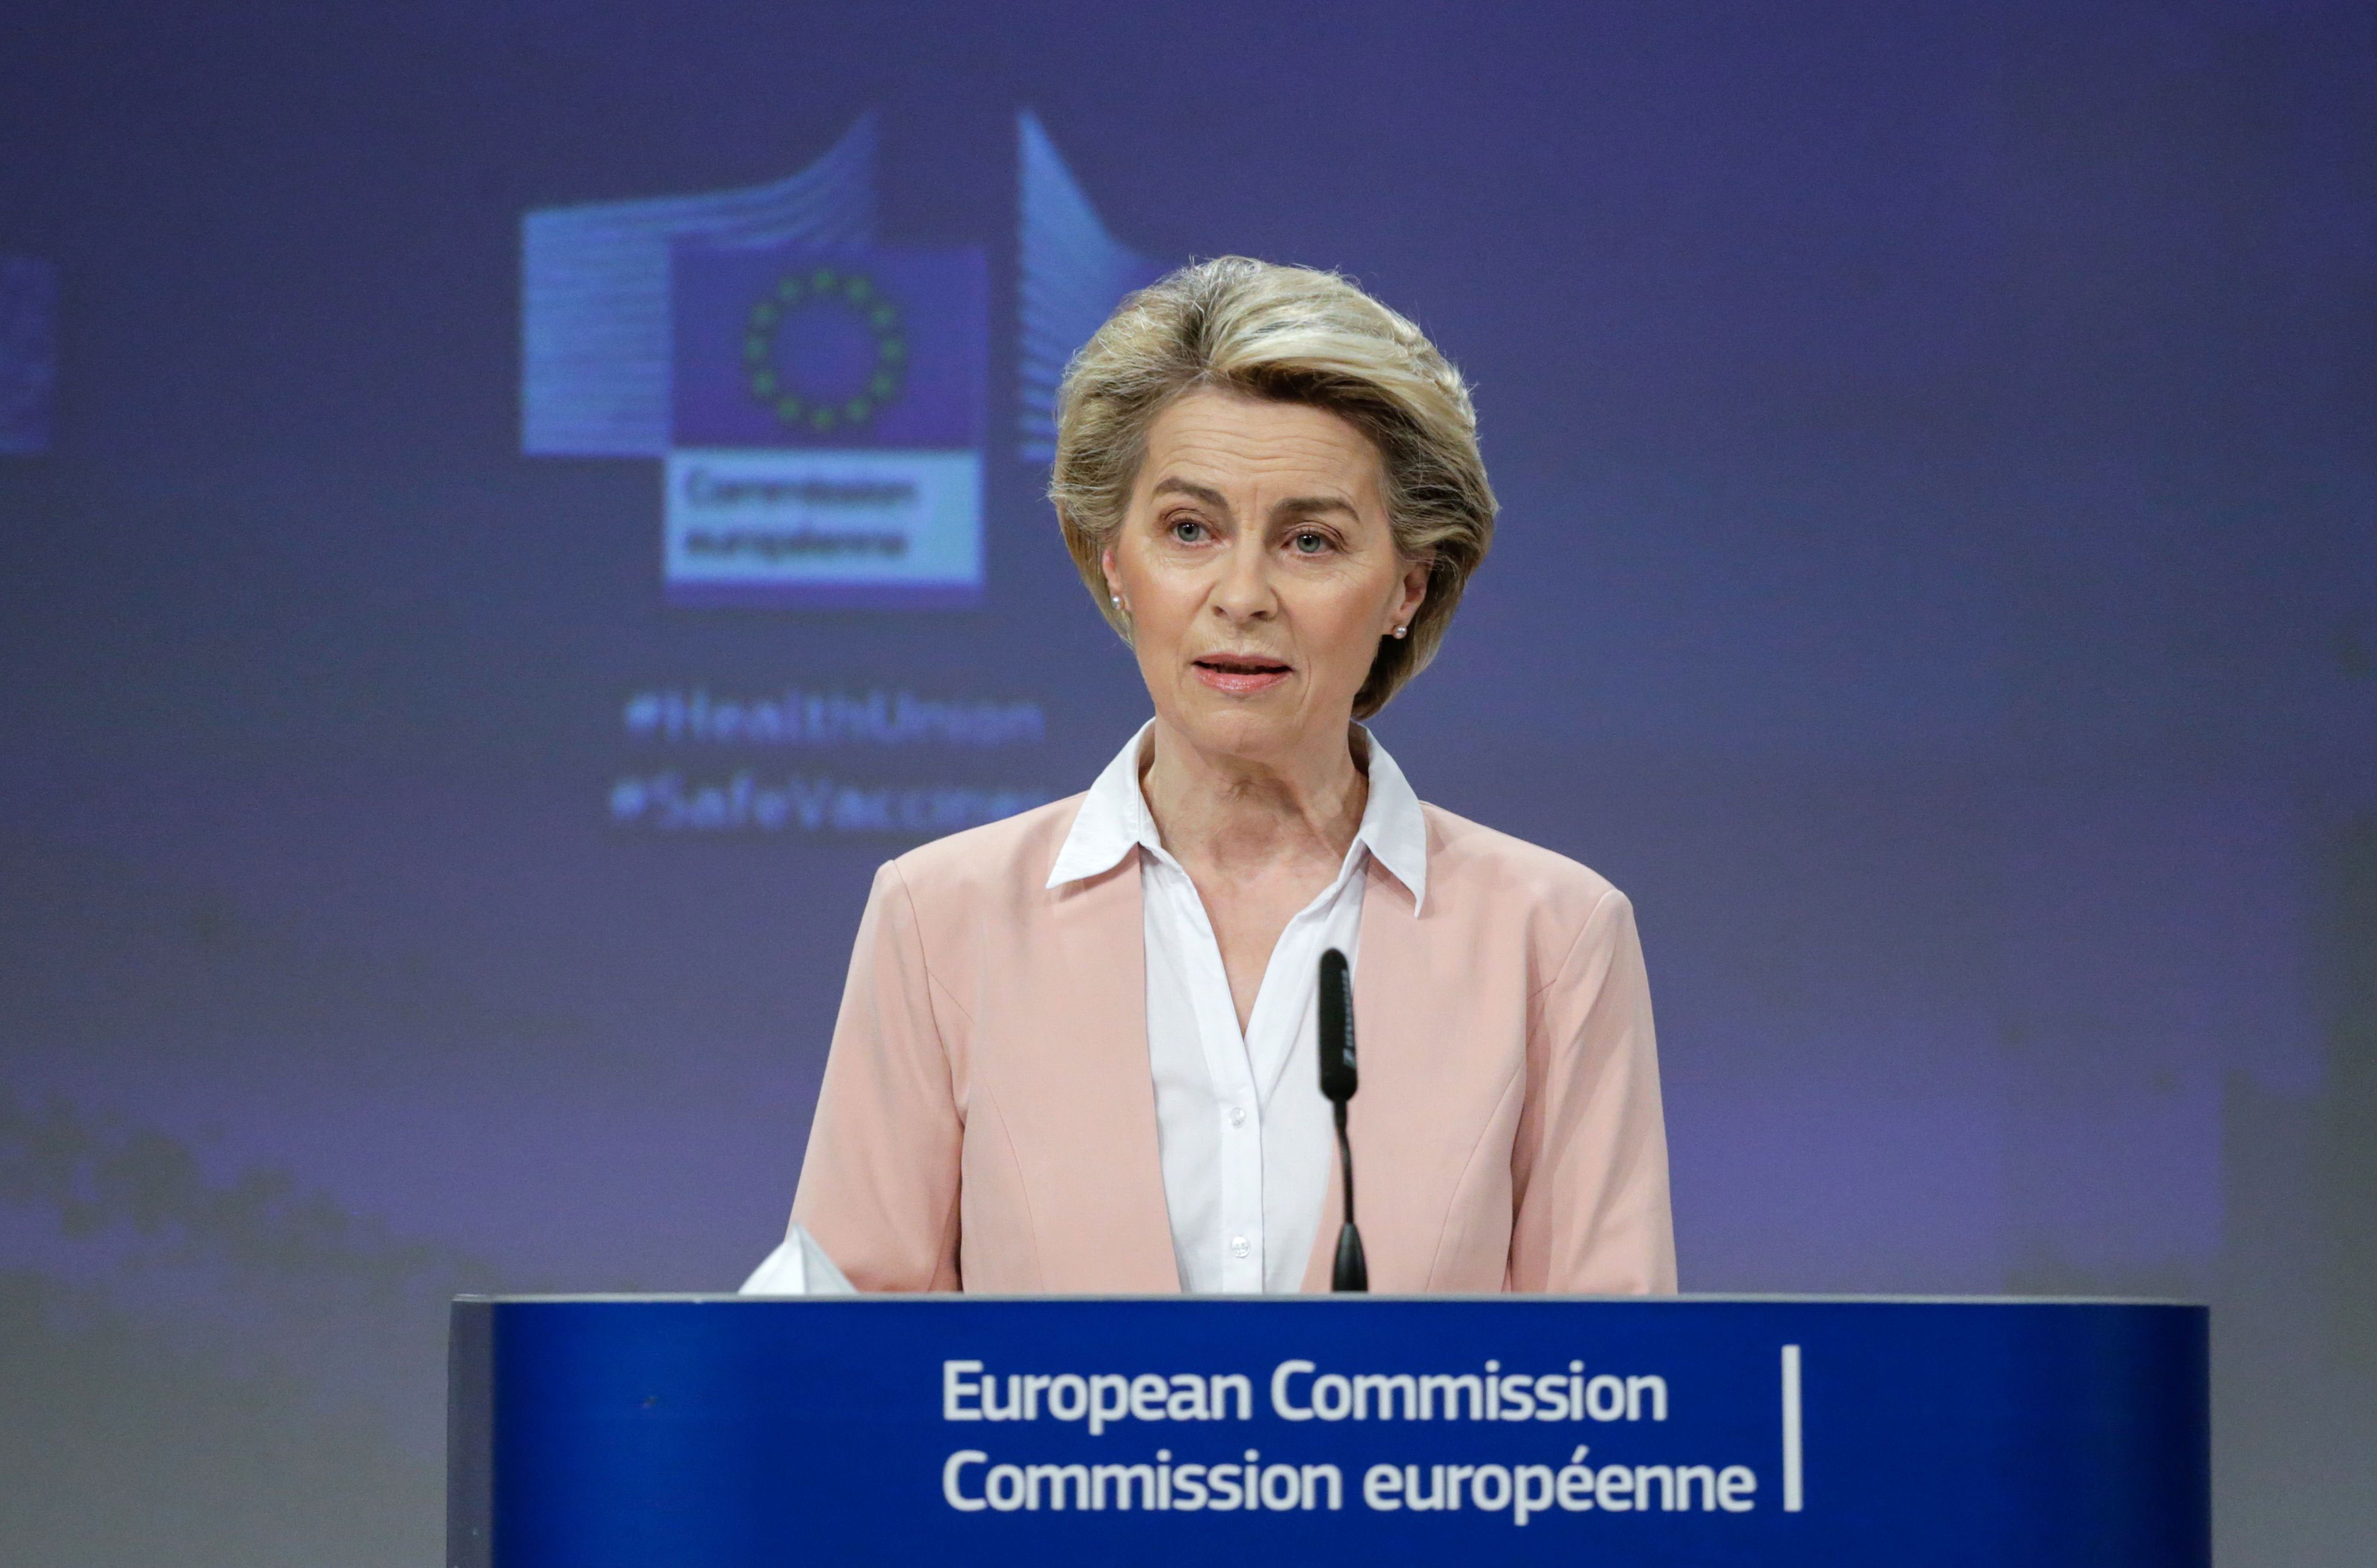 European Commission President Ursula von der Leyen speaks at a press conference in Brussels, Belgium, on February 17.